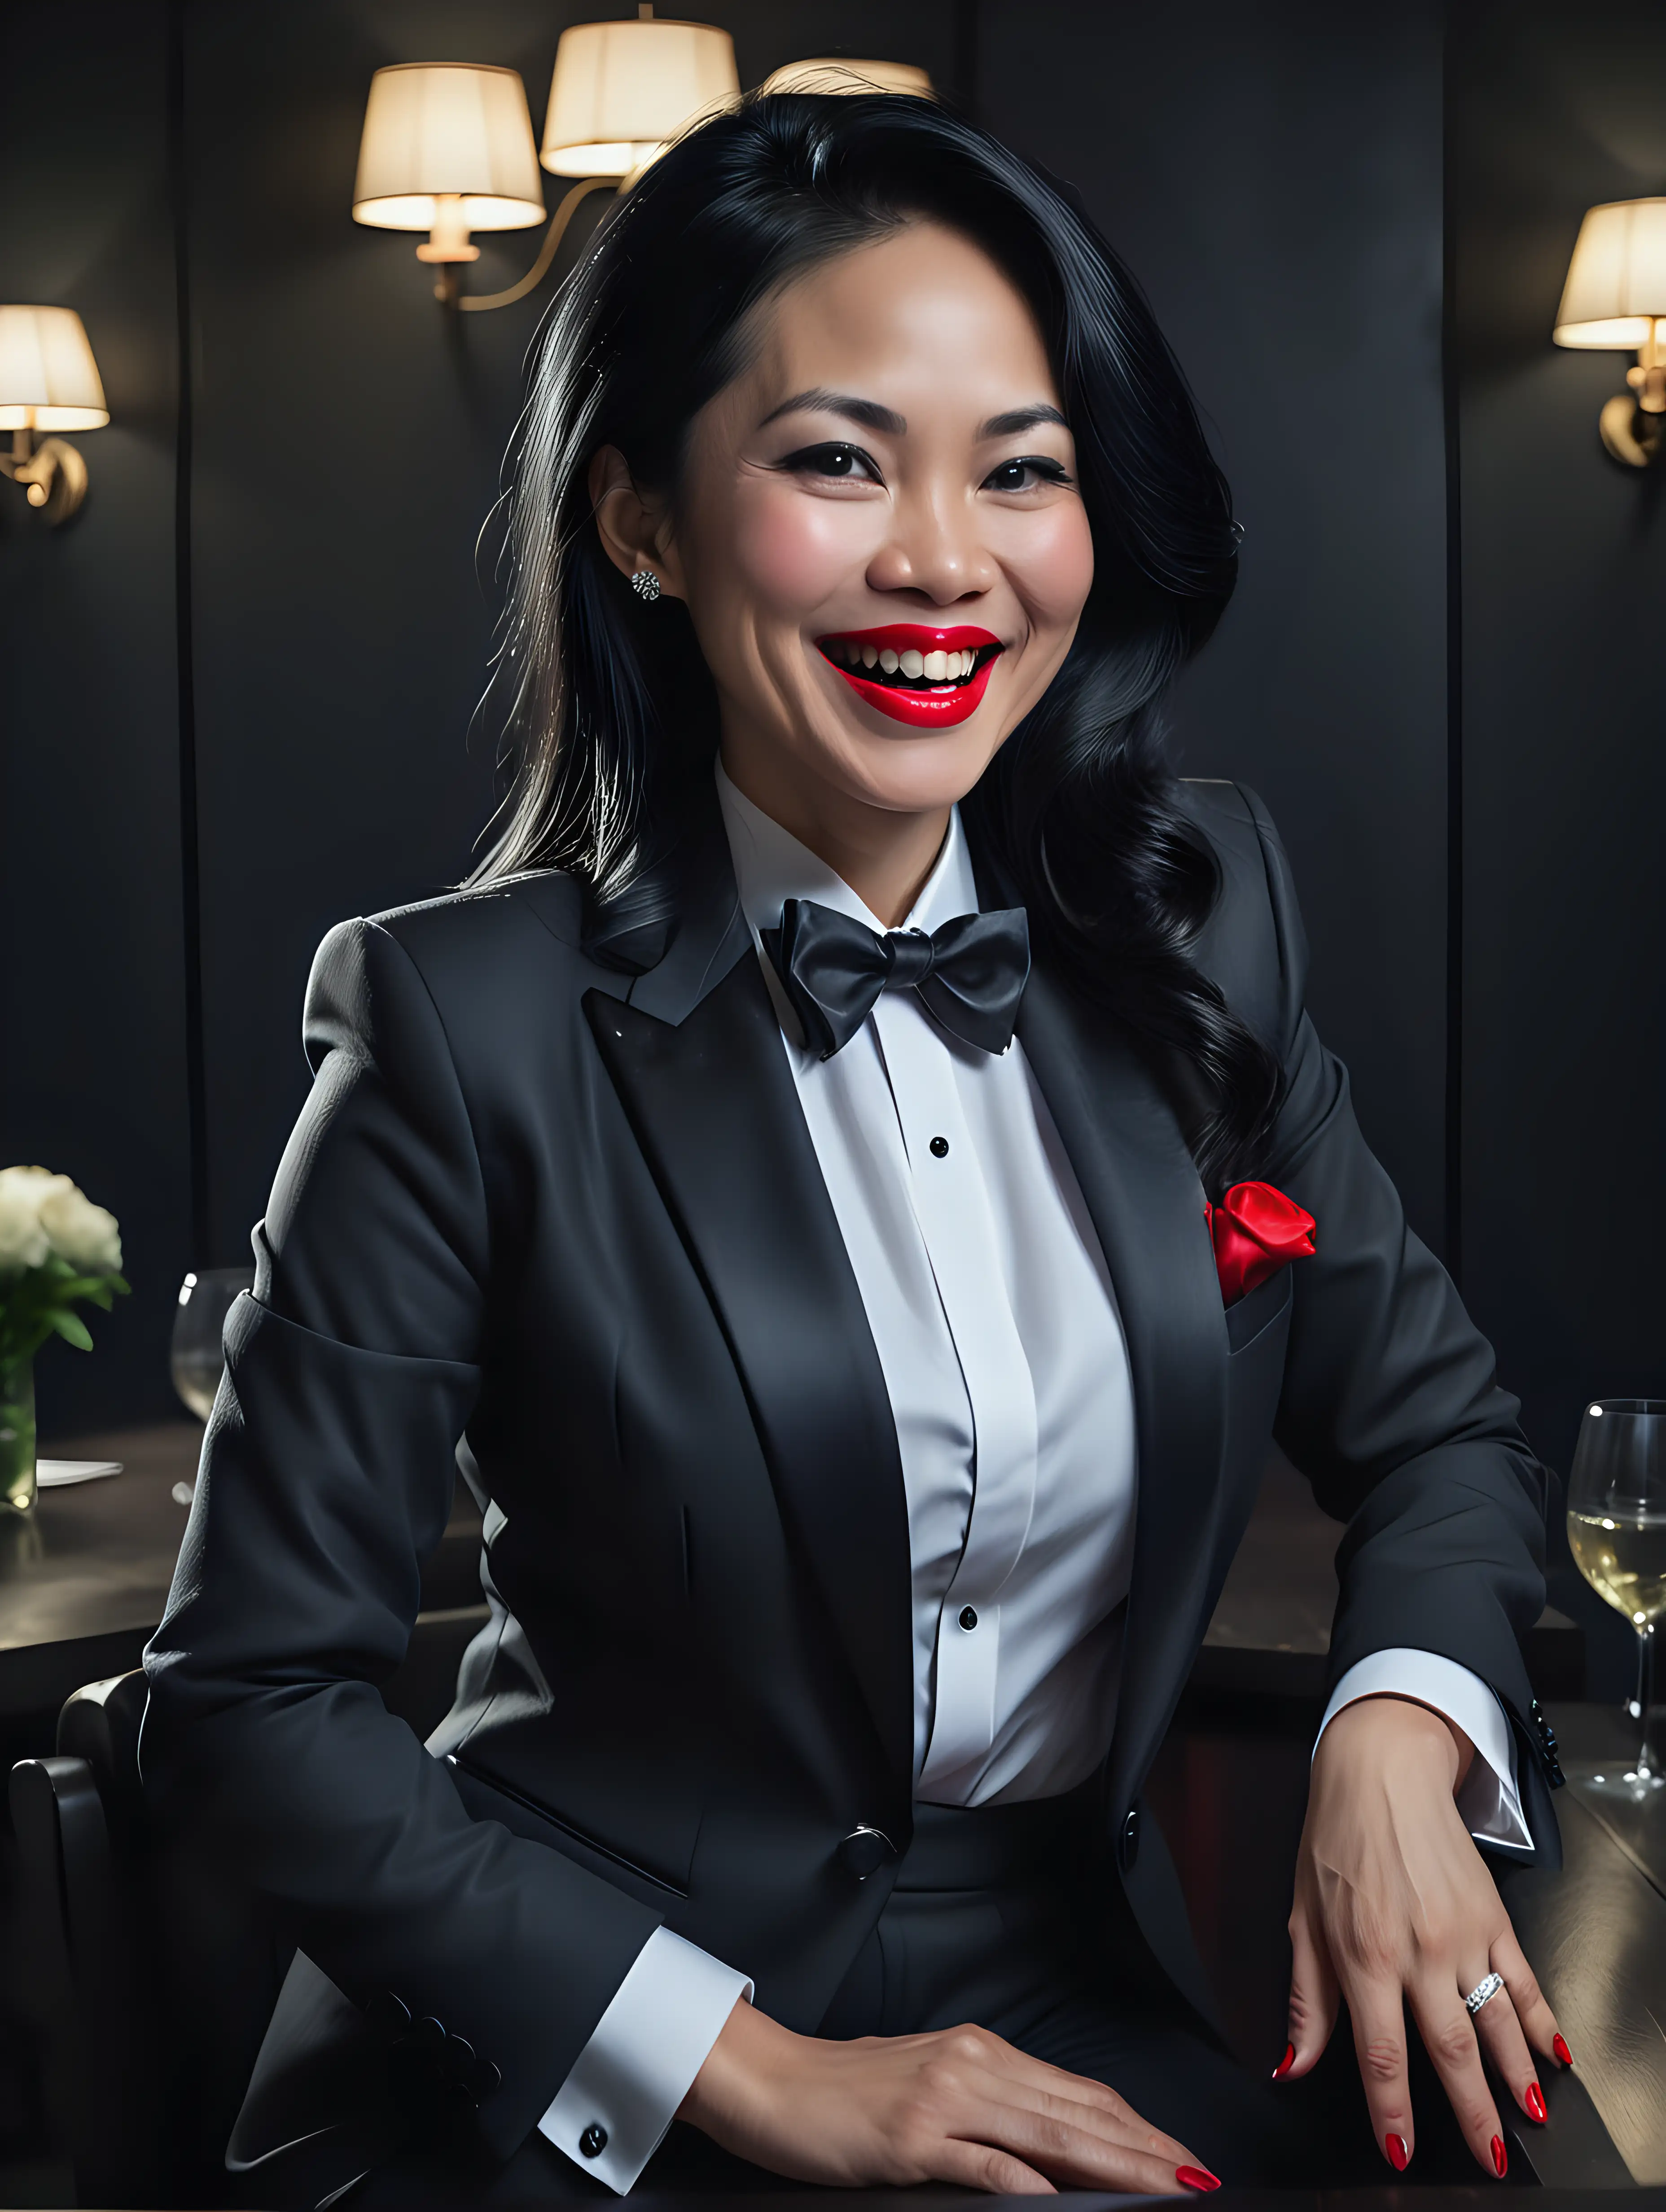 Joyful-Vietnamese-Woman-in-Tuxedo-with-Corsage-at-Dark-Table